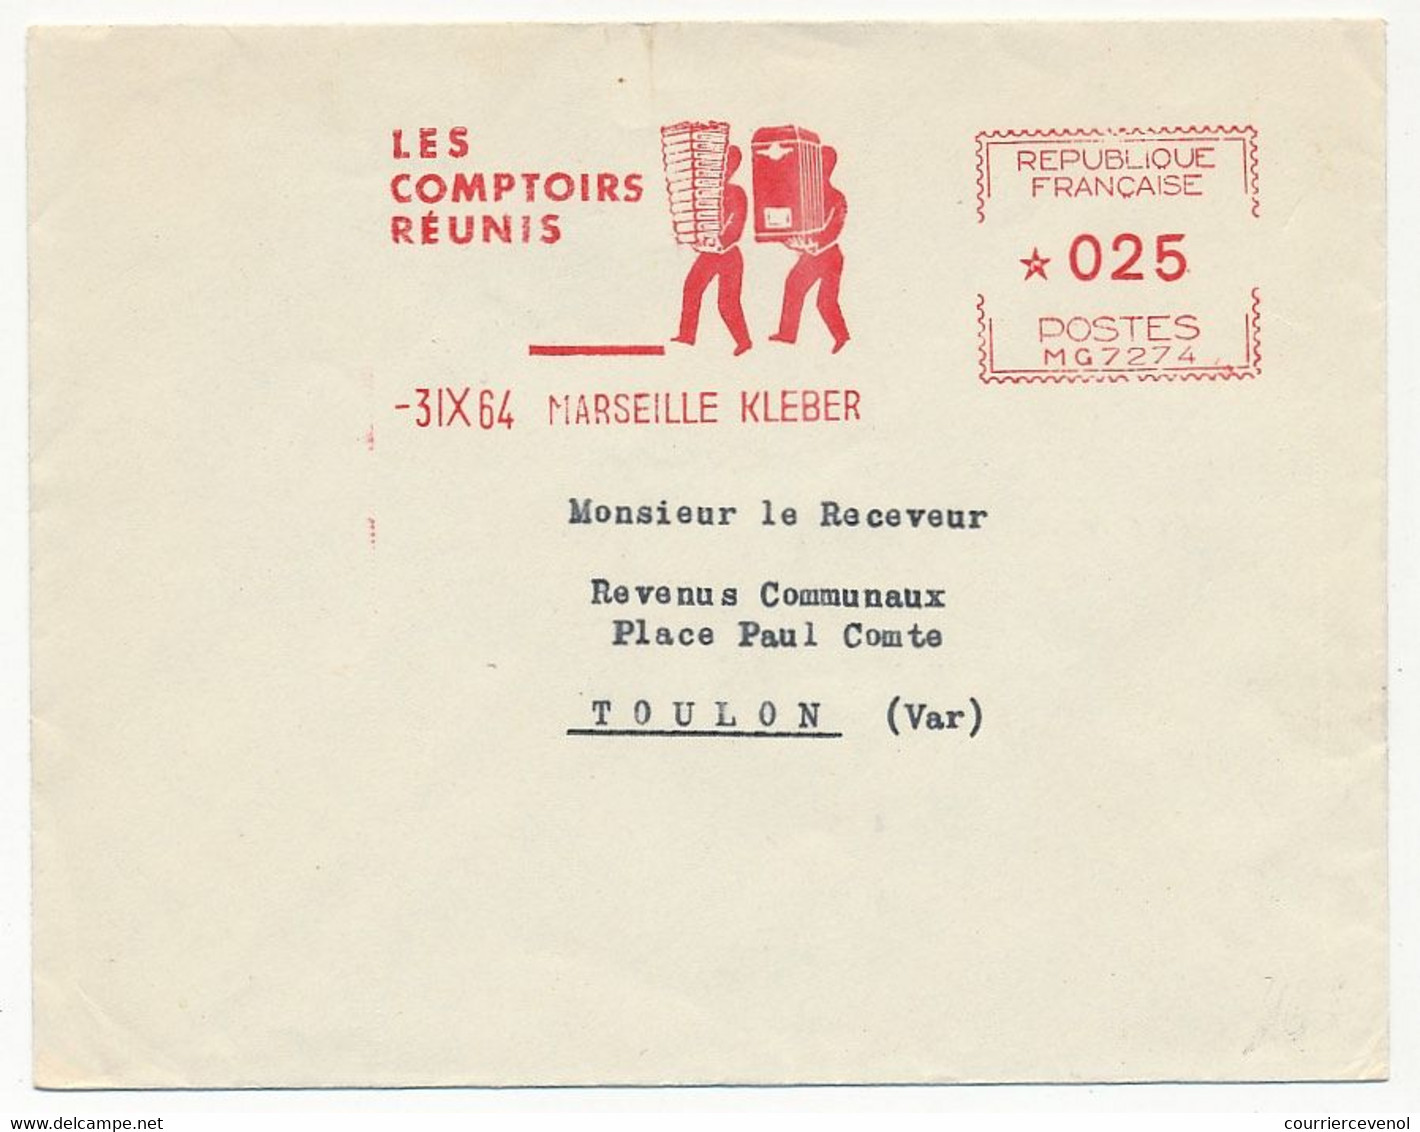 FRANCE - Enveloppe EMA - Les Comptoirs Réunis - 3/9/1964 - Marseille Kléber - EMA ( Maquina De Huellas A Franquear)